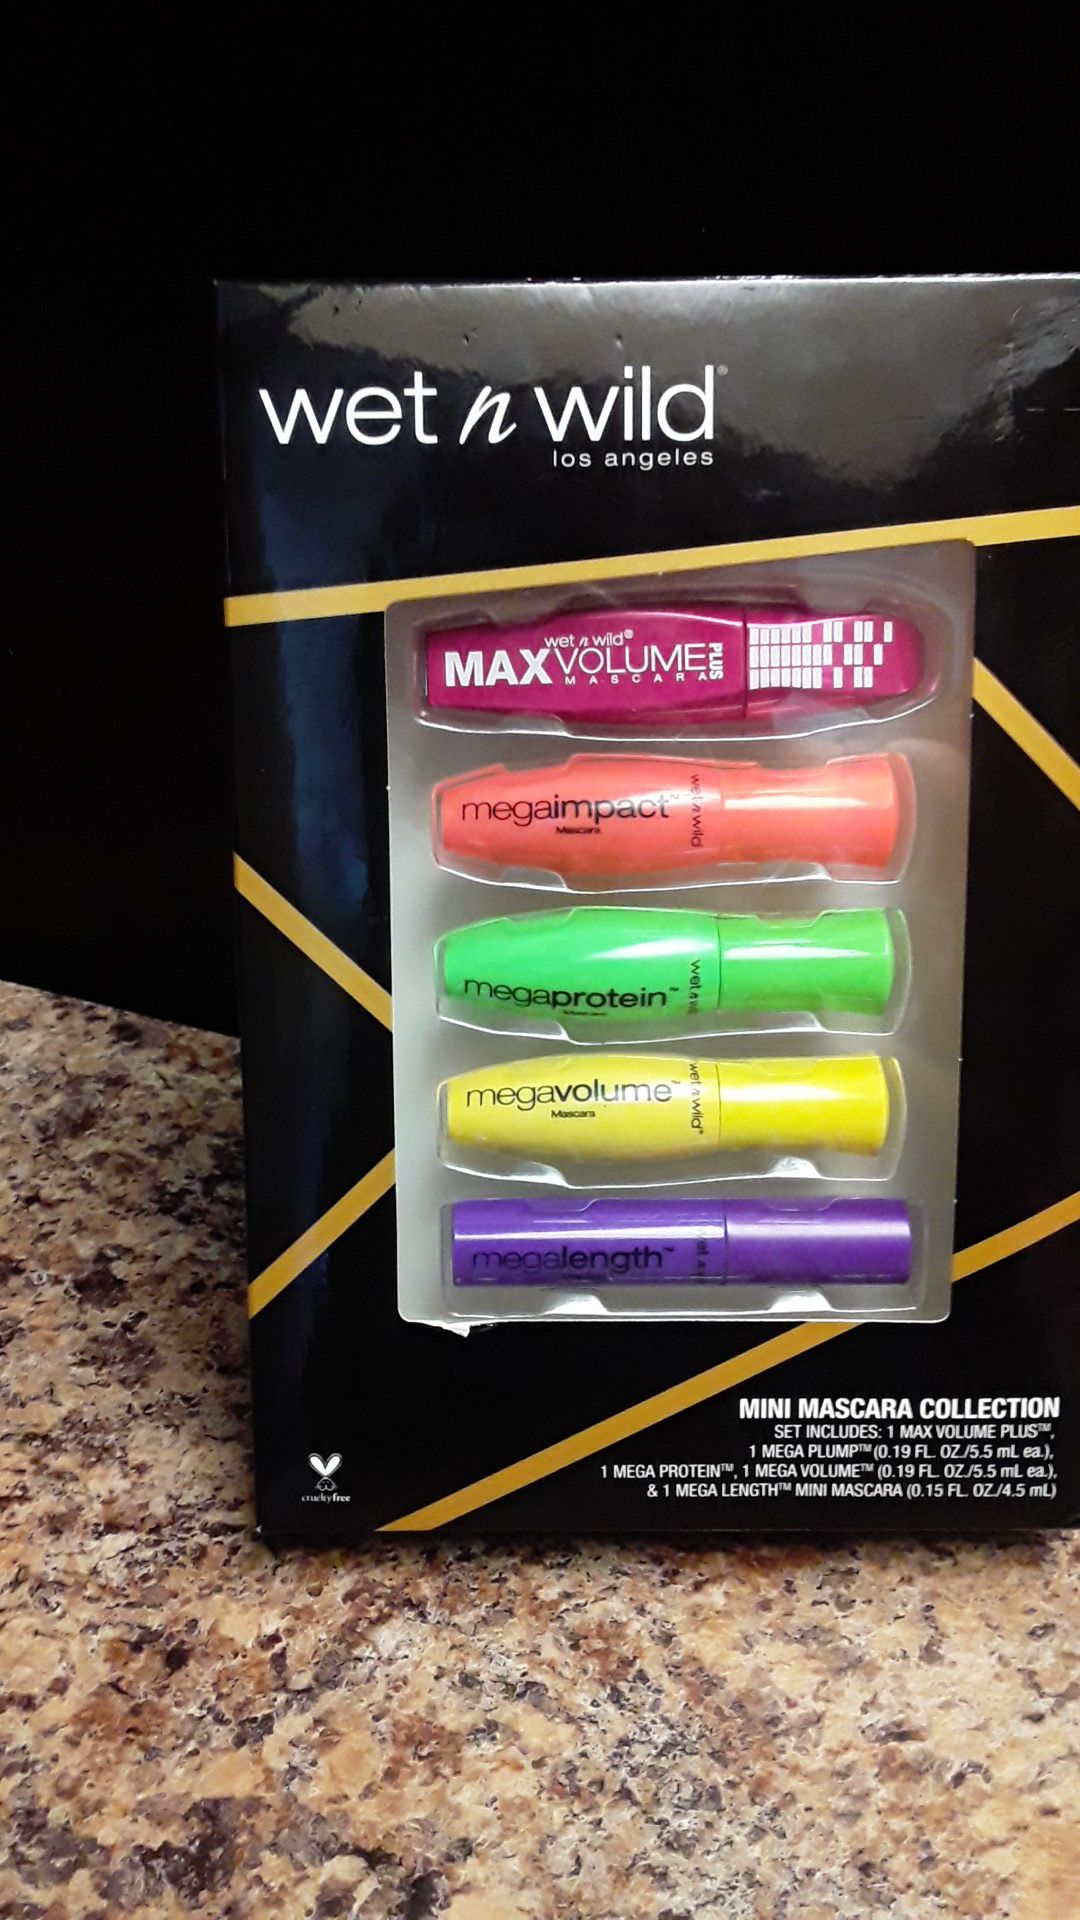 Wet n Wild Mascara Mini Collection